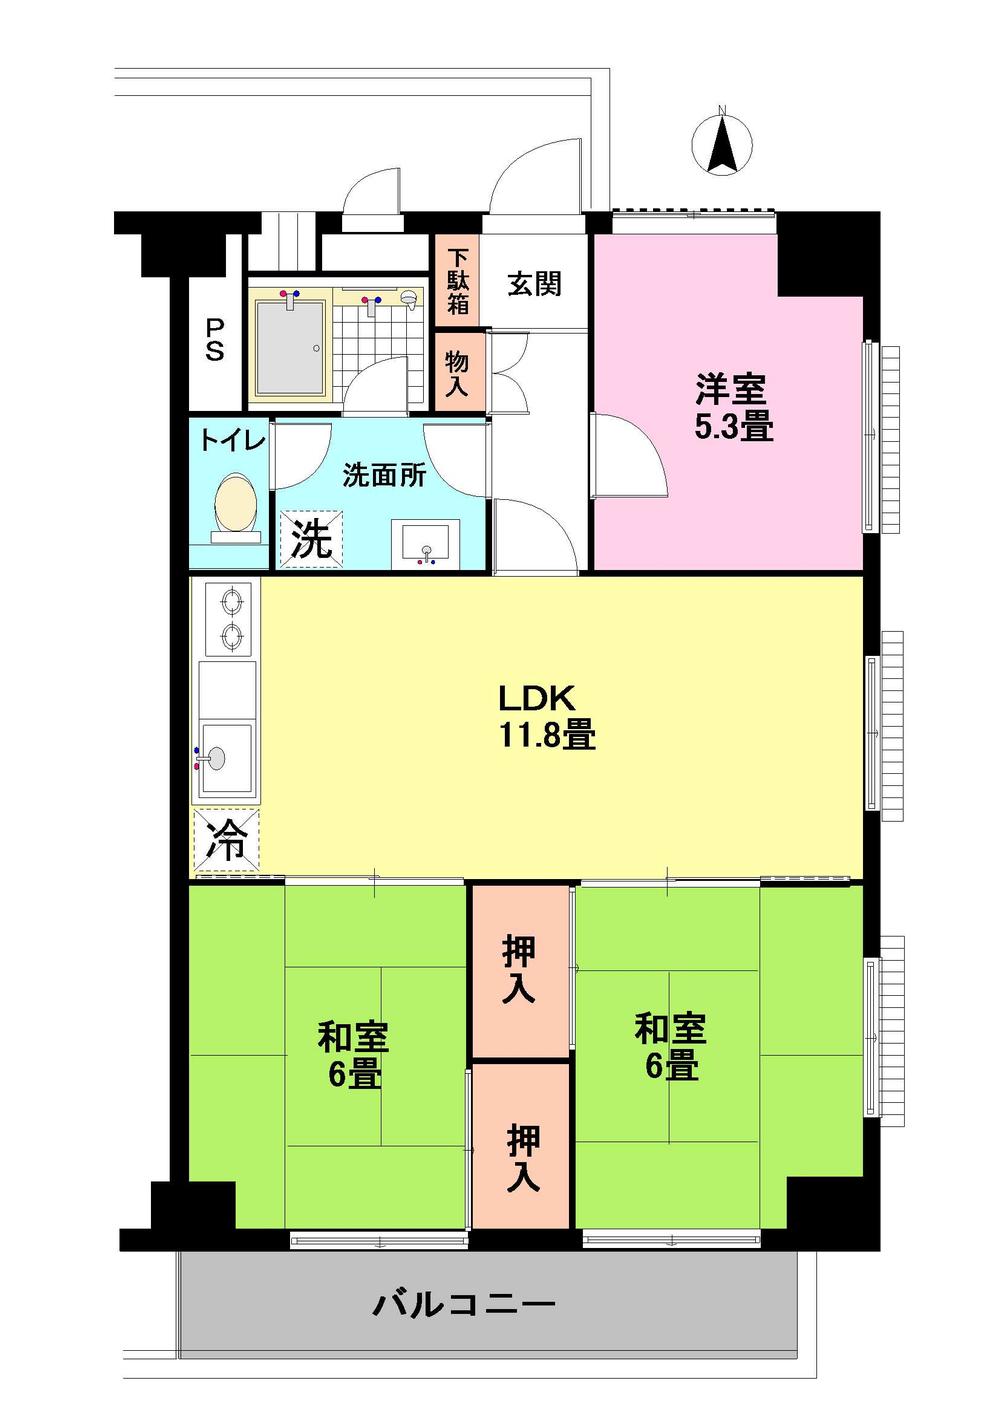 Floor plan. 3LDK, Price 10.8 million yen, Footprint 65 sq m , Balcony area 7.08 sq m